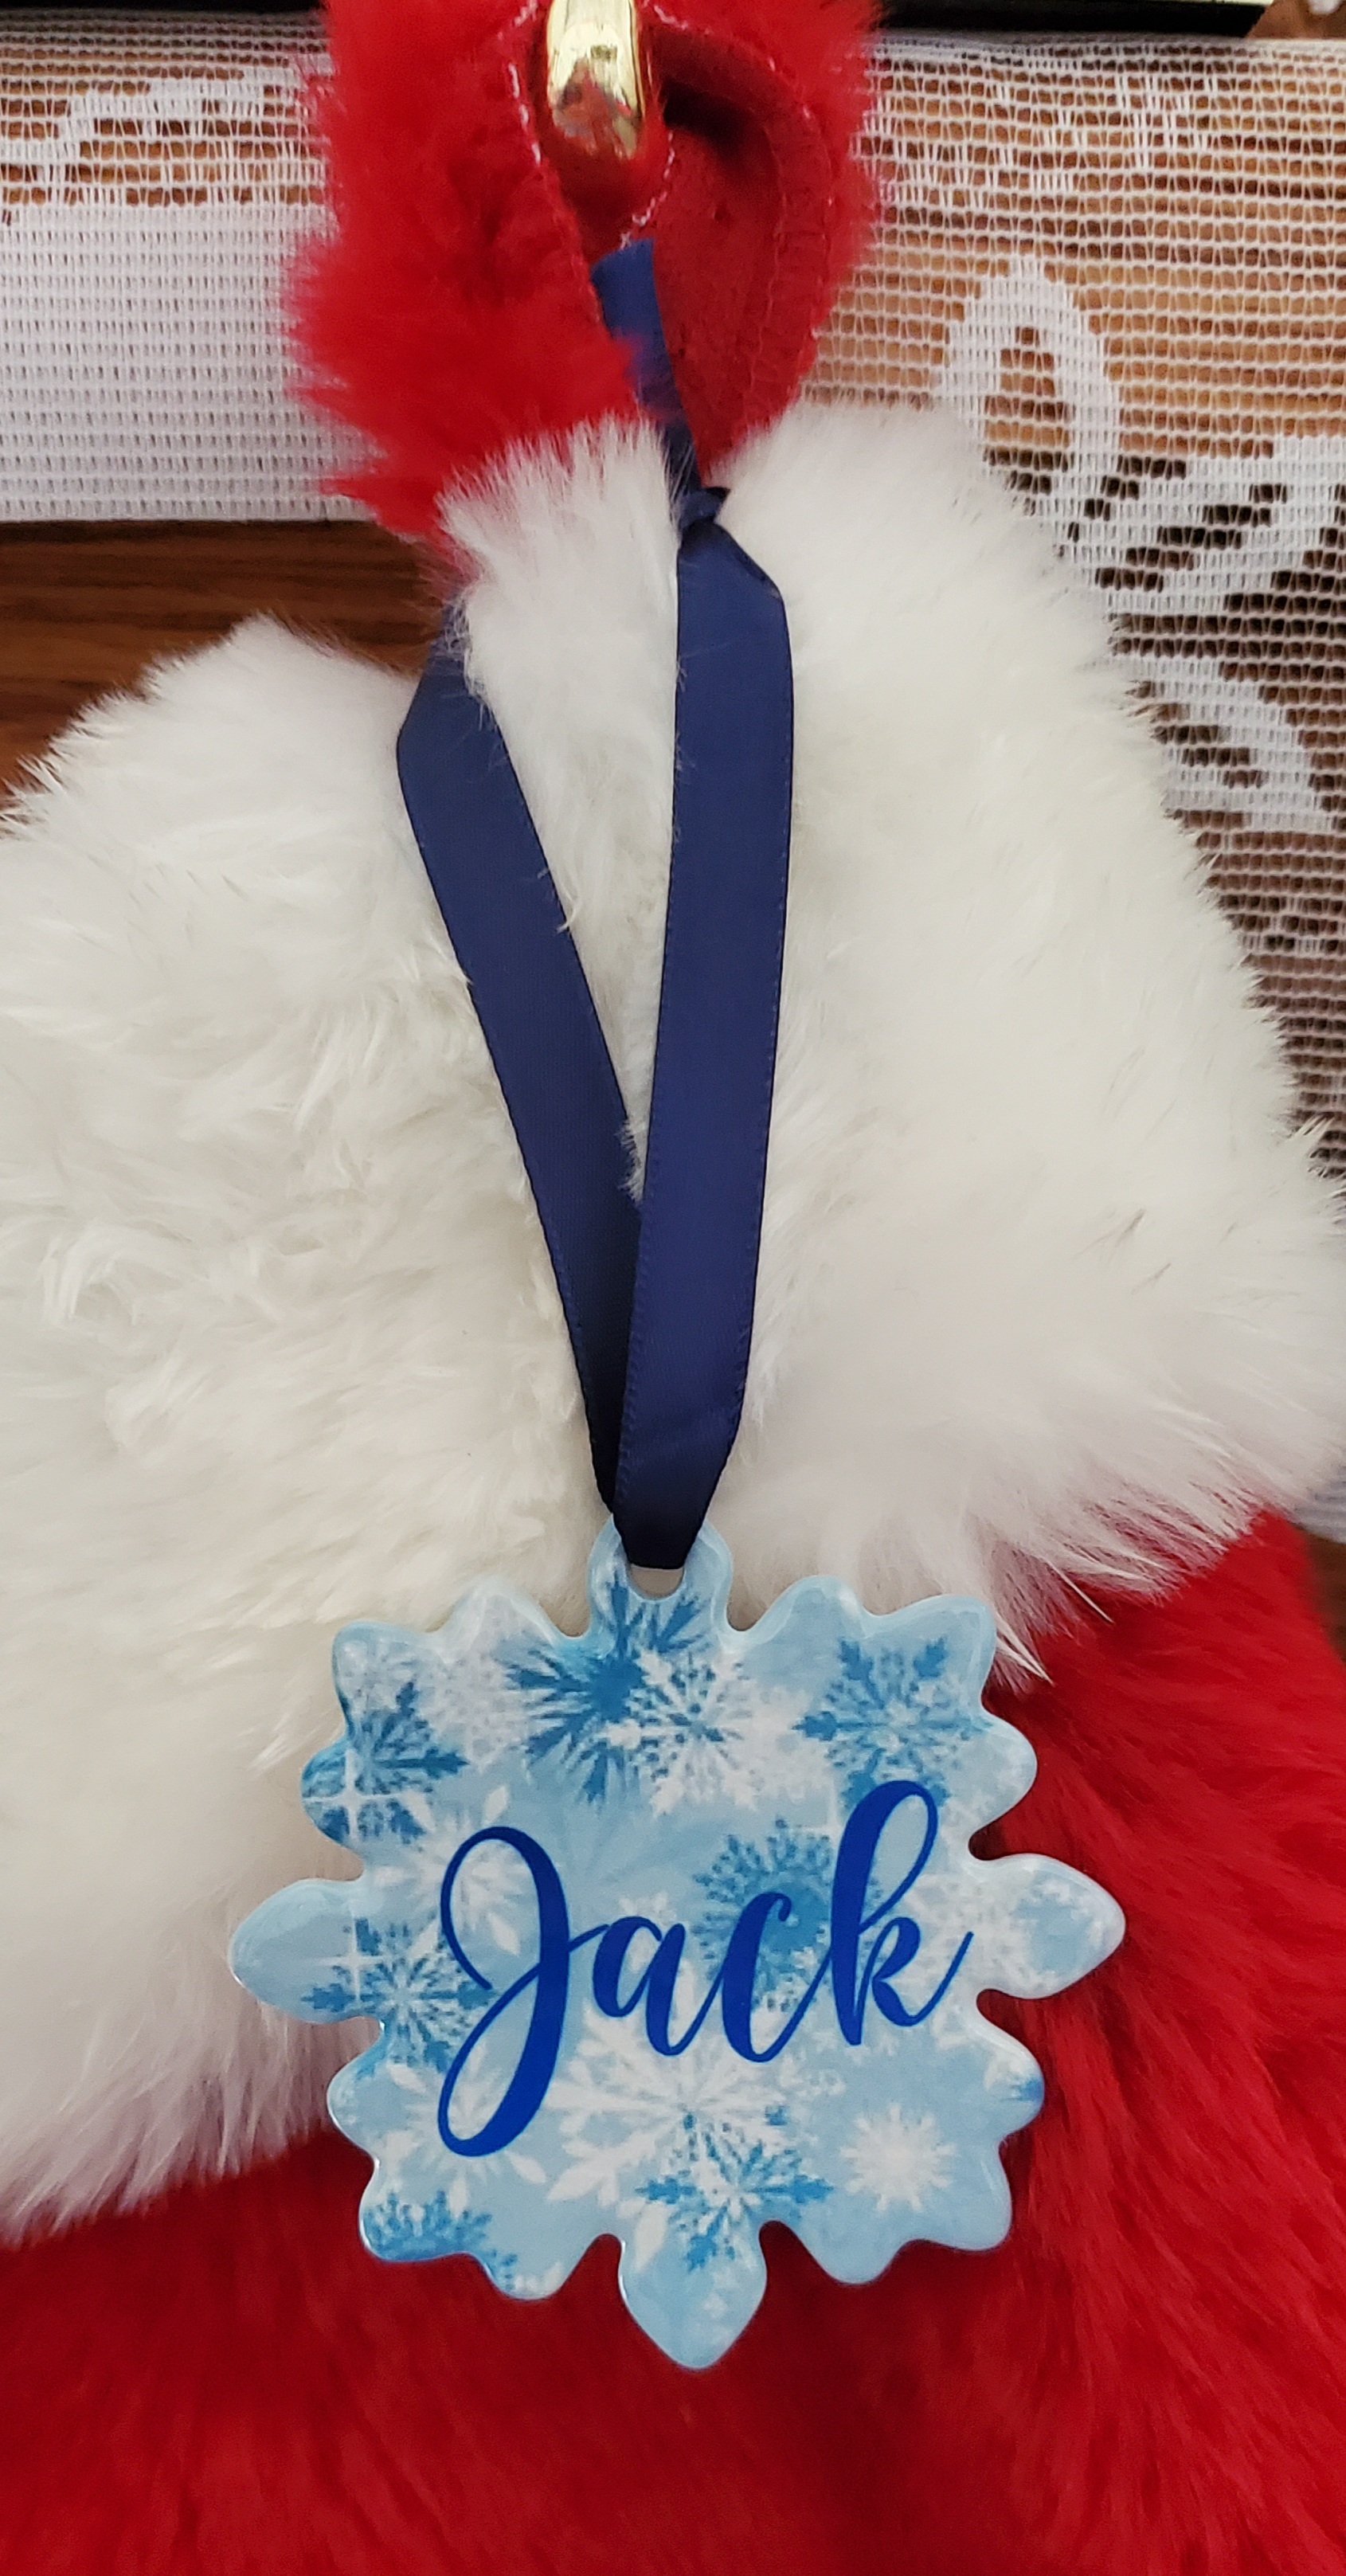 Snowflake porcelain ornament used as Christmas stocking name tag